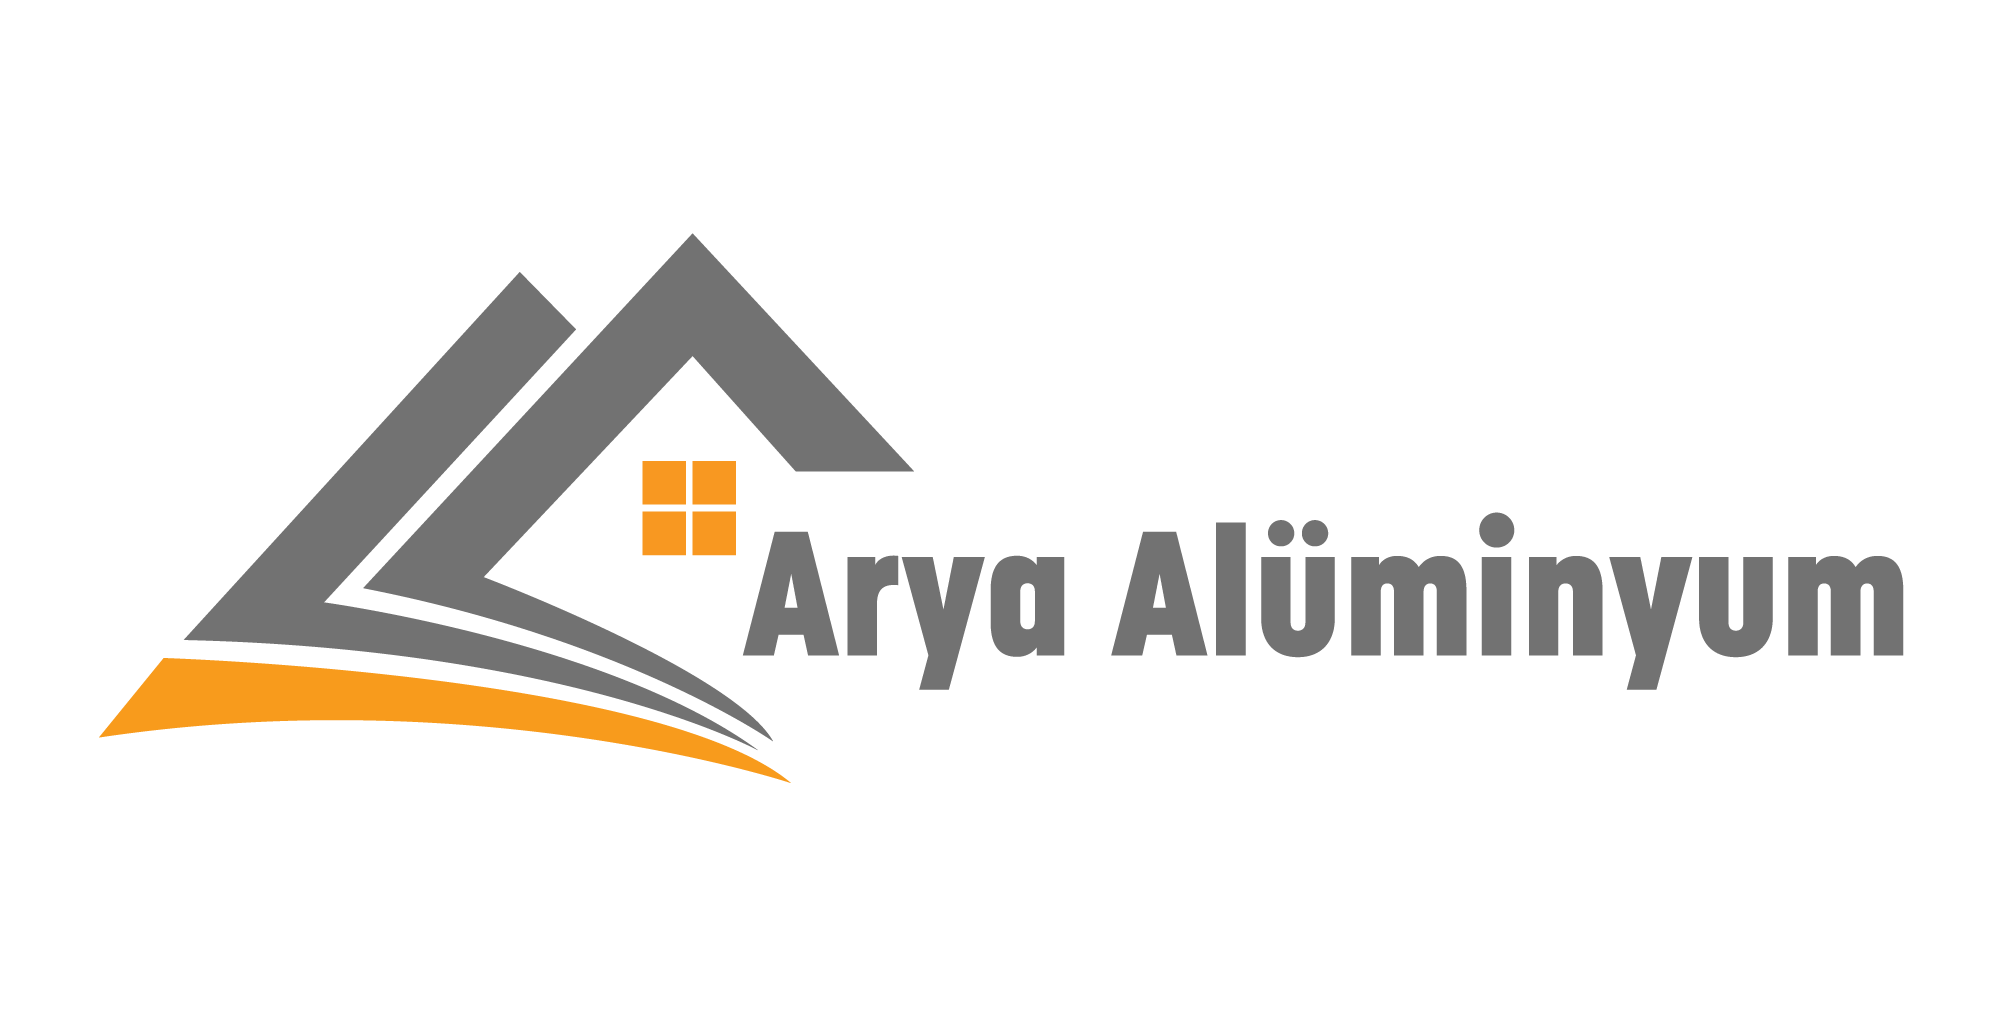 arya-aluminyum-logo